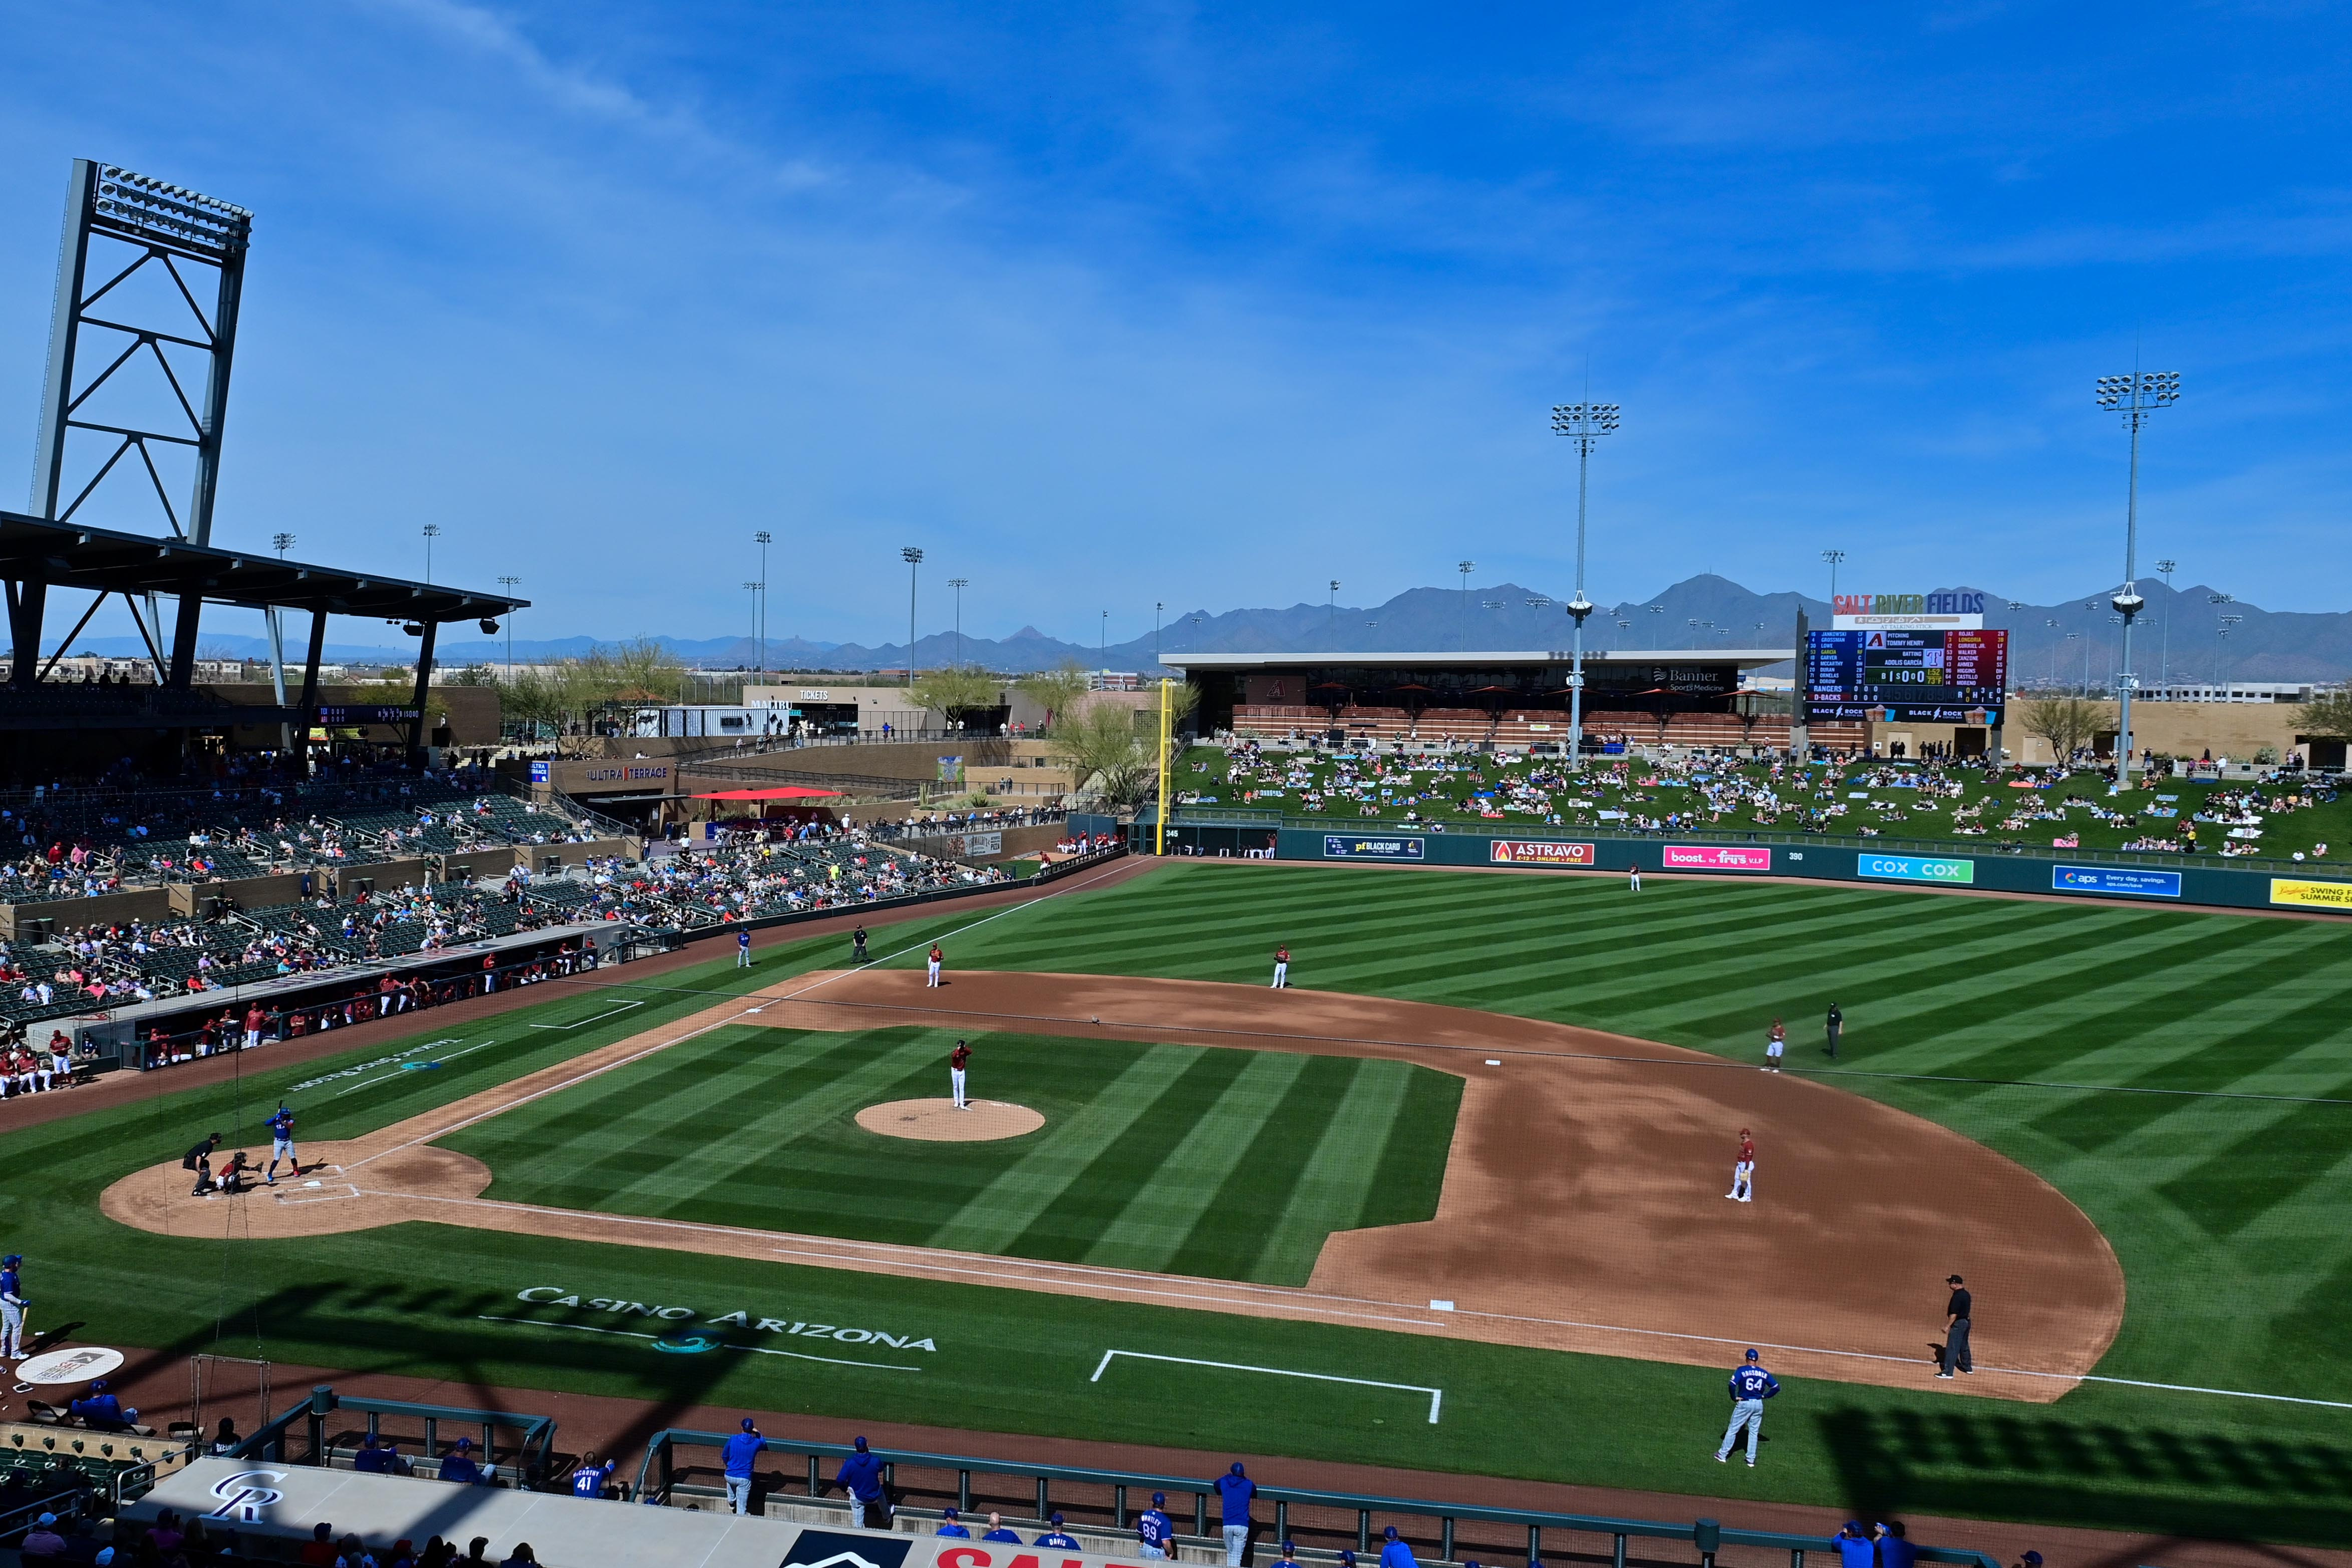 Arizona baseball pays tribute to Major League with fullon reenactment